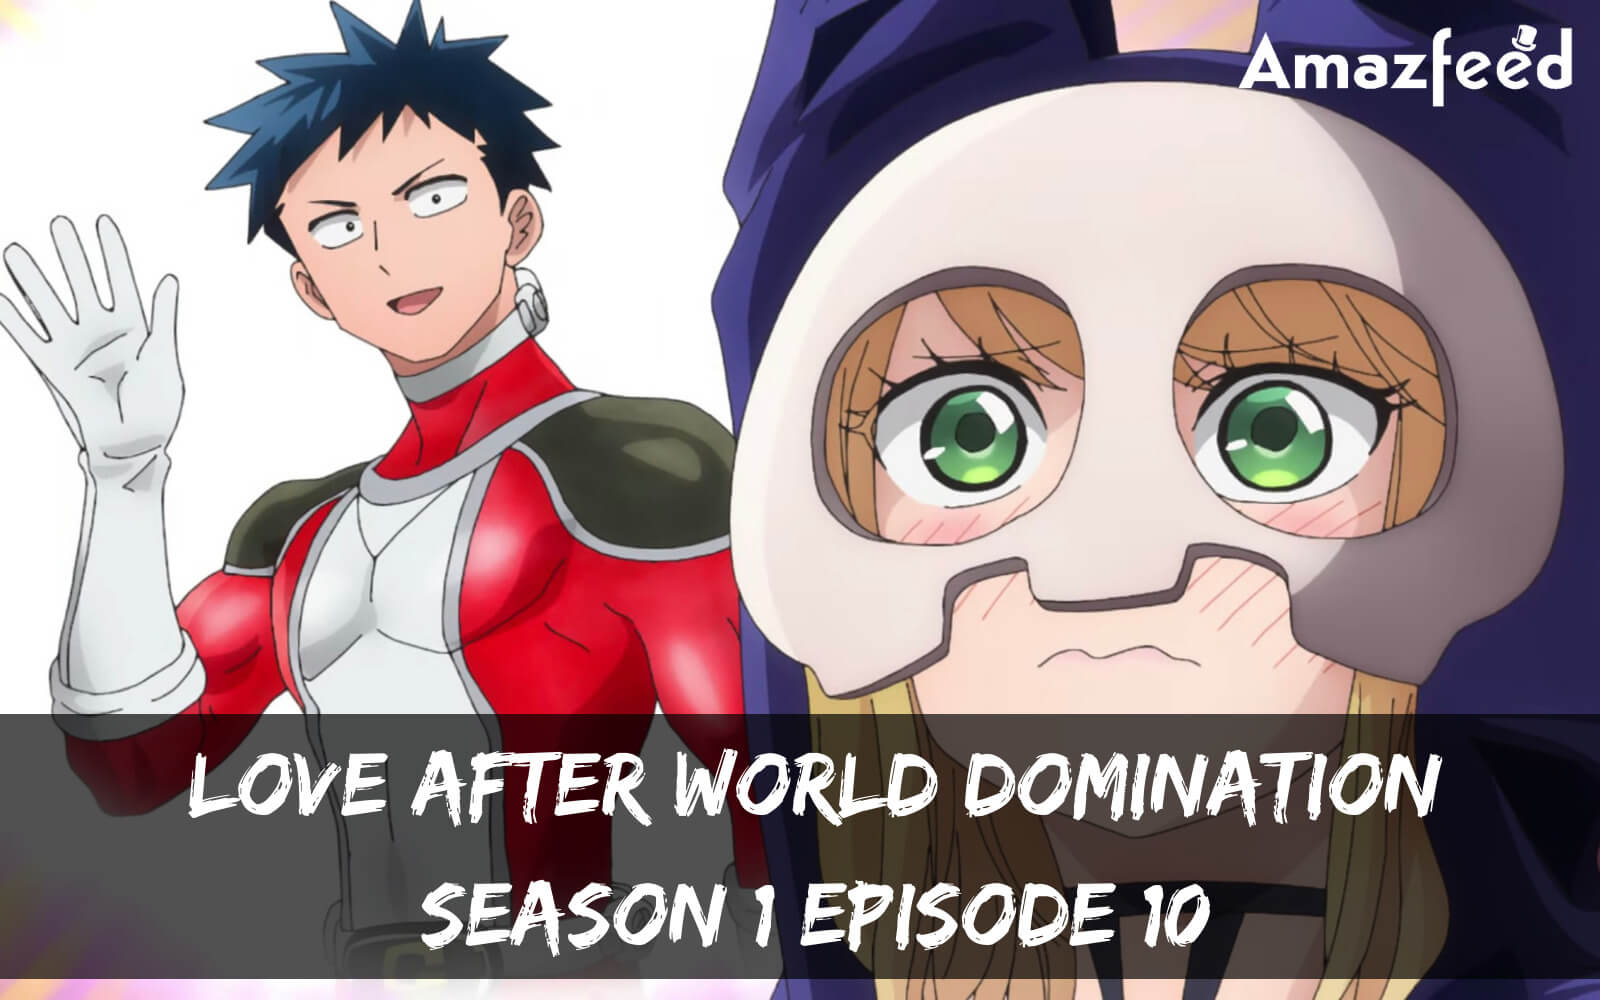 Love After World Domination Season 1 Episode 10 Release date